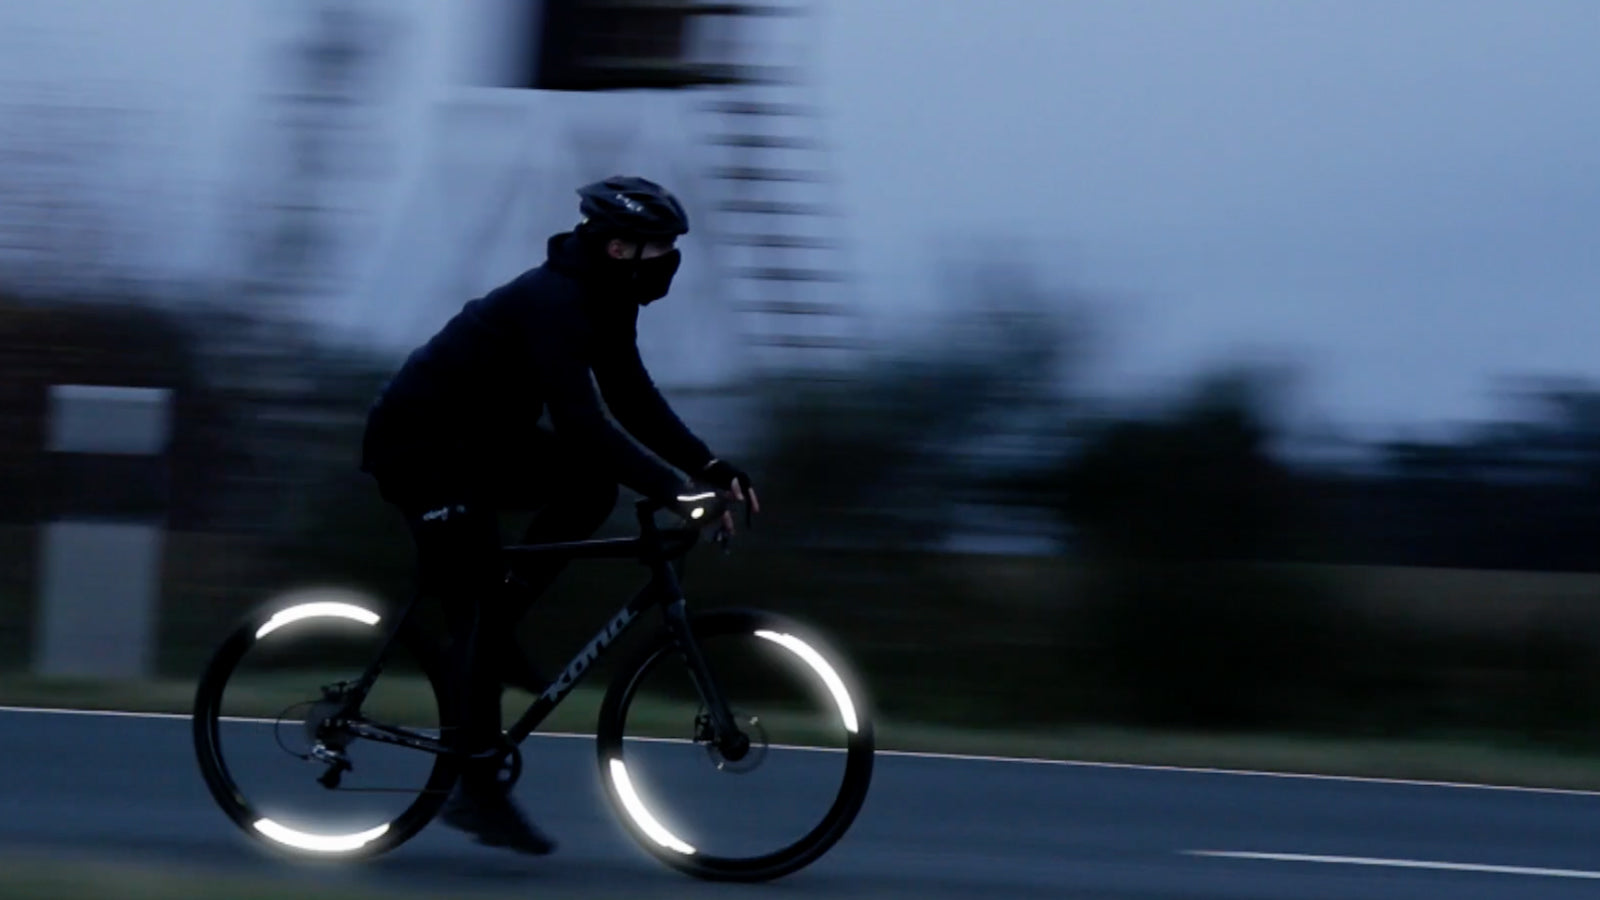 Reflective bike function - Flectr 360 grabs car headlights